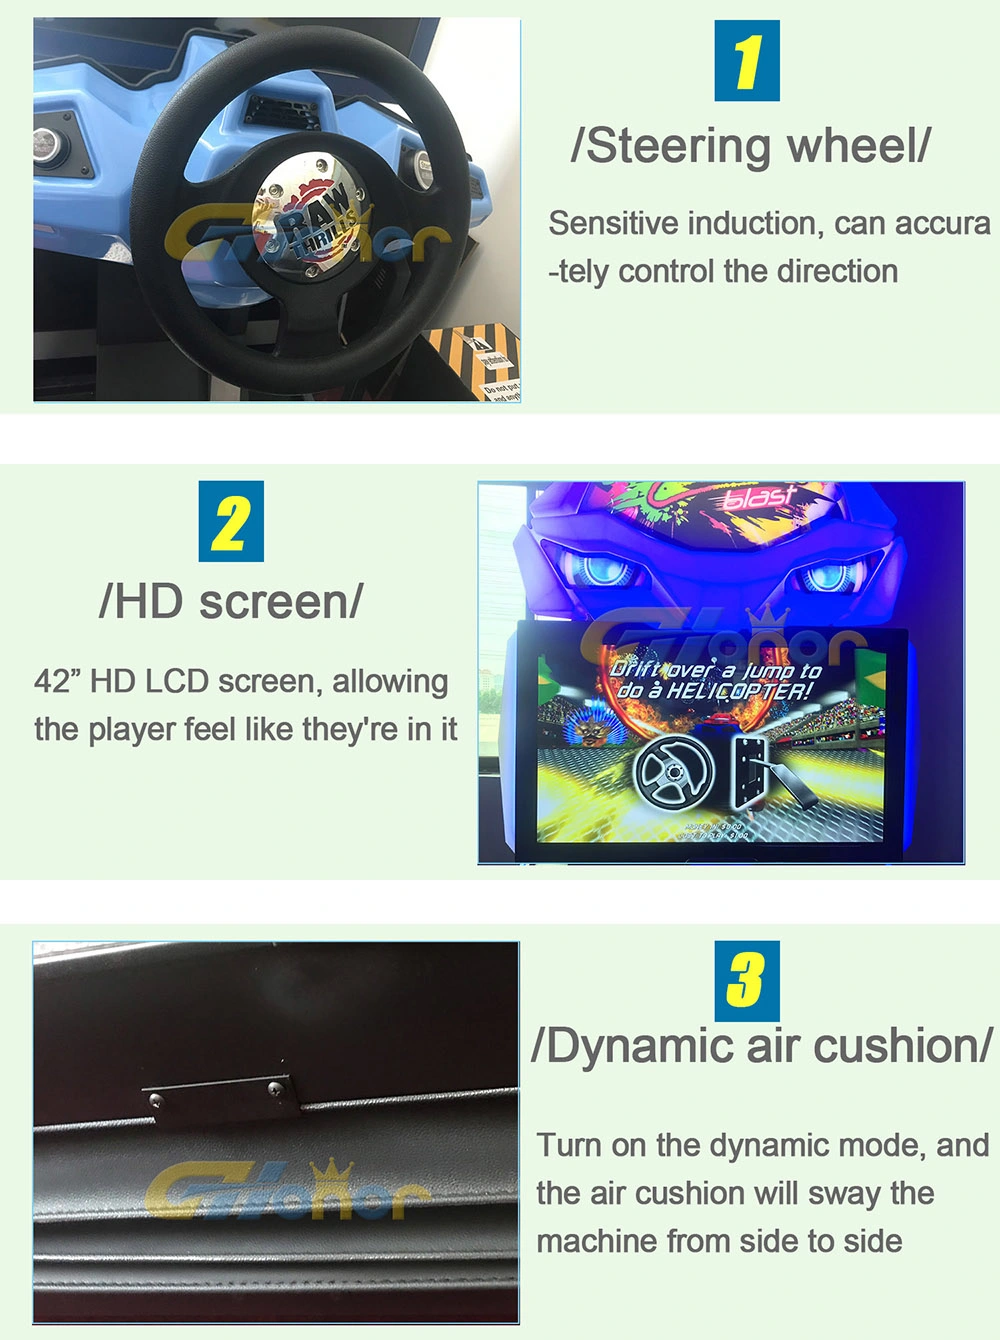 Popular Dynamic Car Driving Game Arcade Simulator Racing Game Machine Coin Pusher Car Racing Game Console Arcade Car Racer Game Machine for Adult